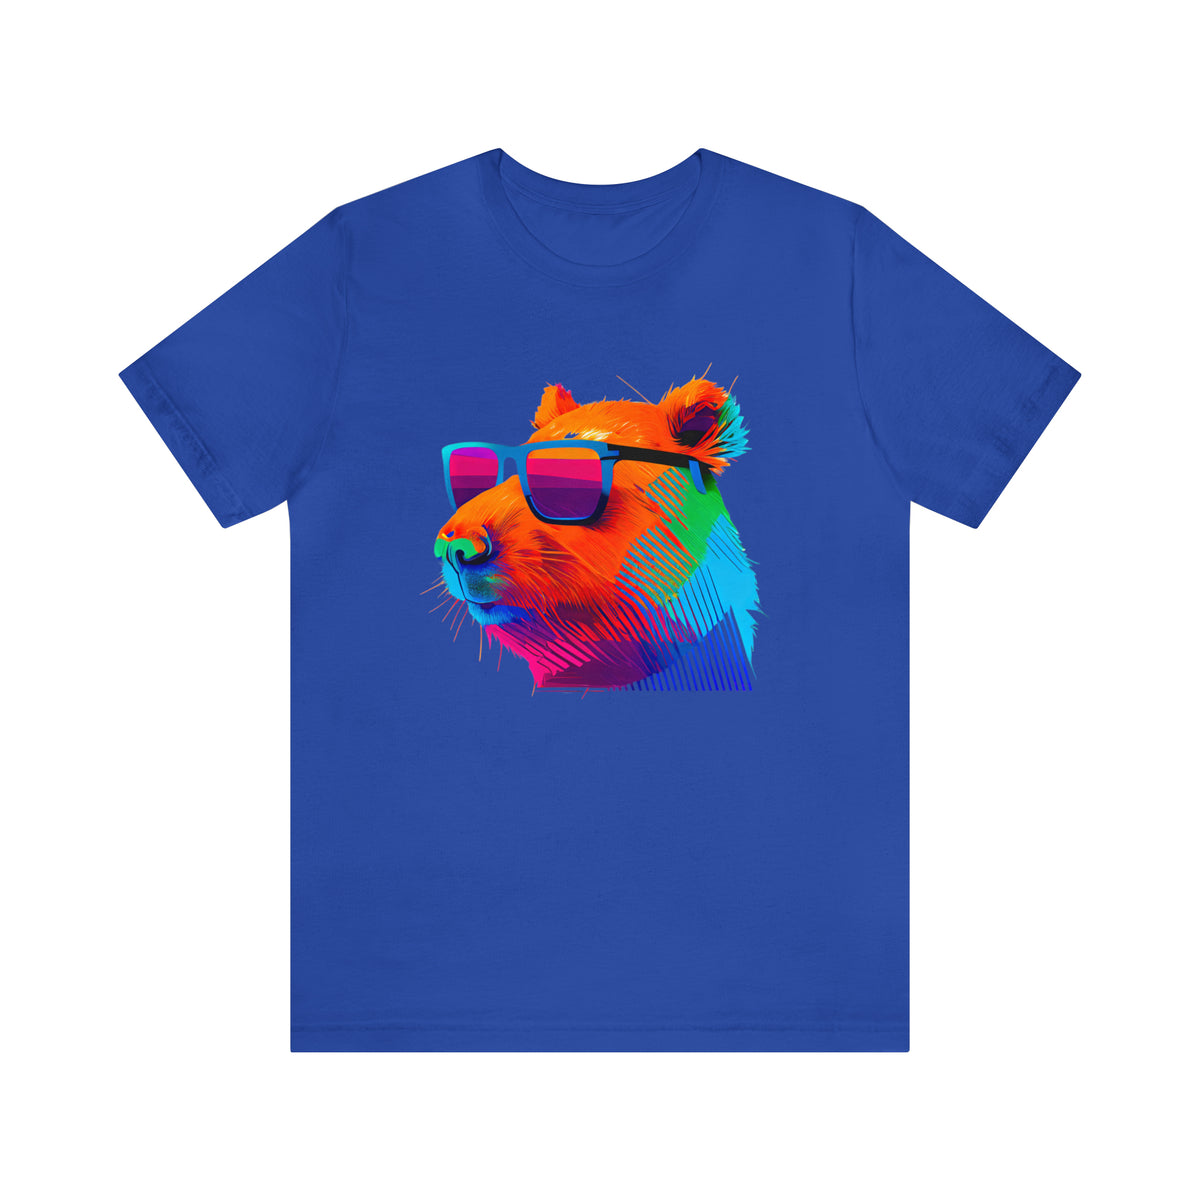 Cool Sunglasses Capybara Shirt | Capybara Lover Gift | Capybara Art Shirt | Retro Capybara Shirt | Unisex Jersey T-shirt